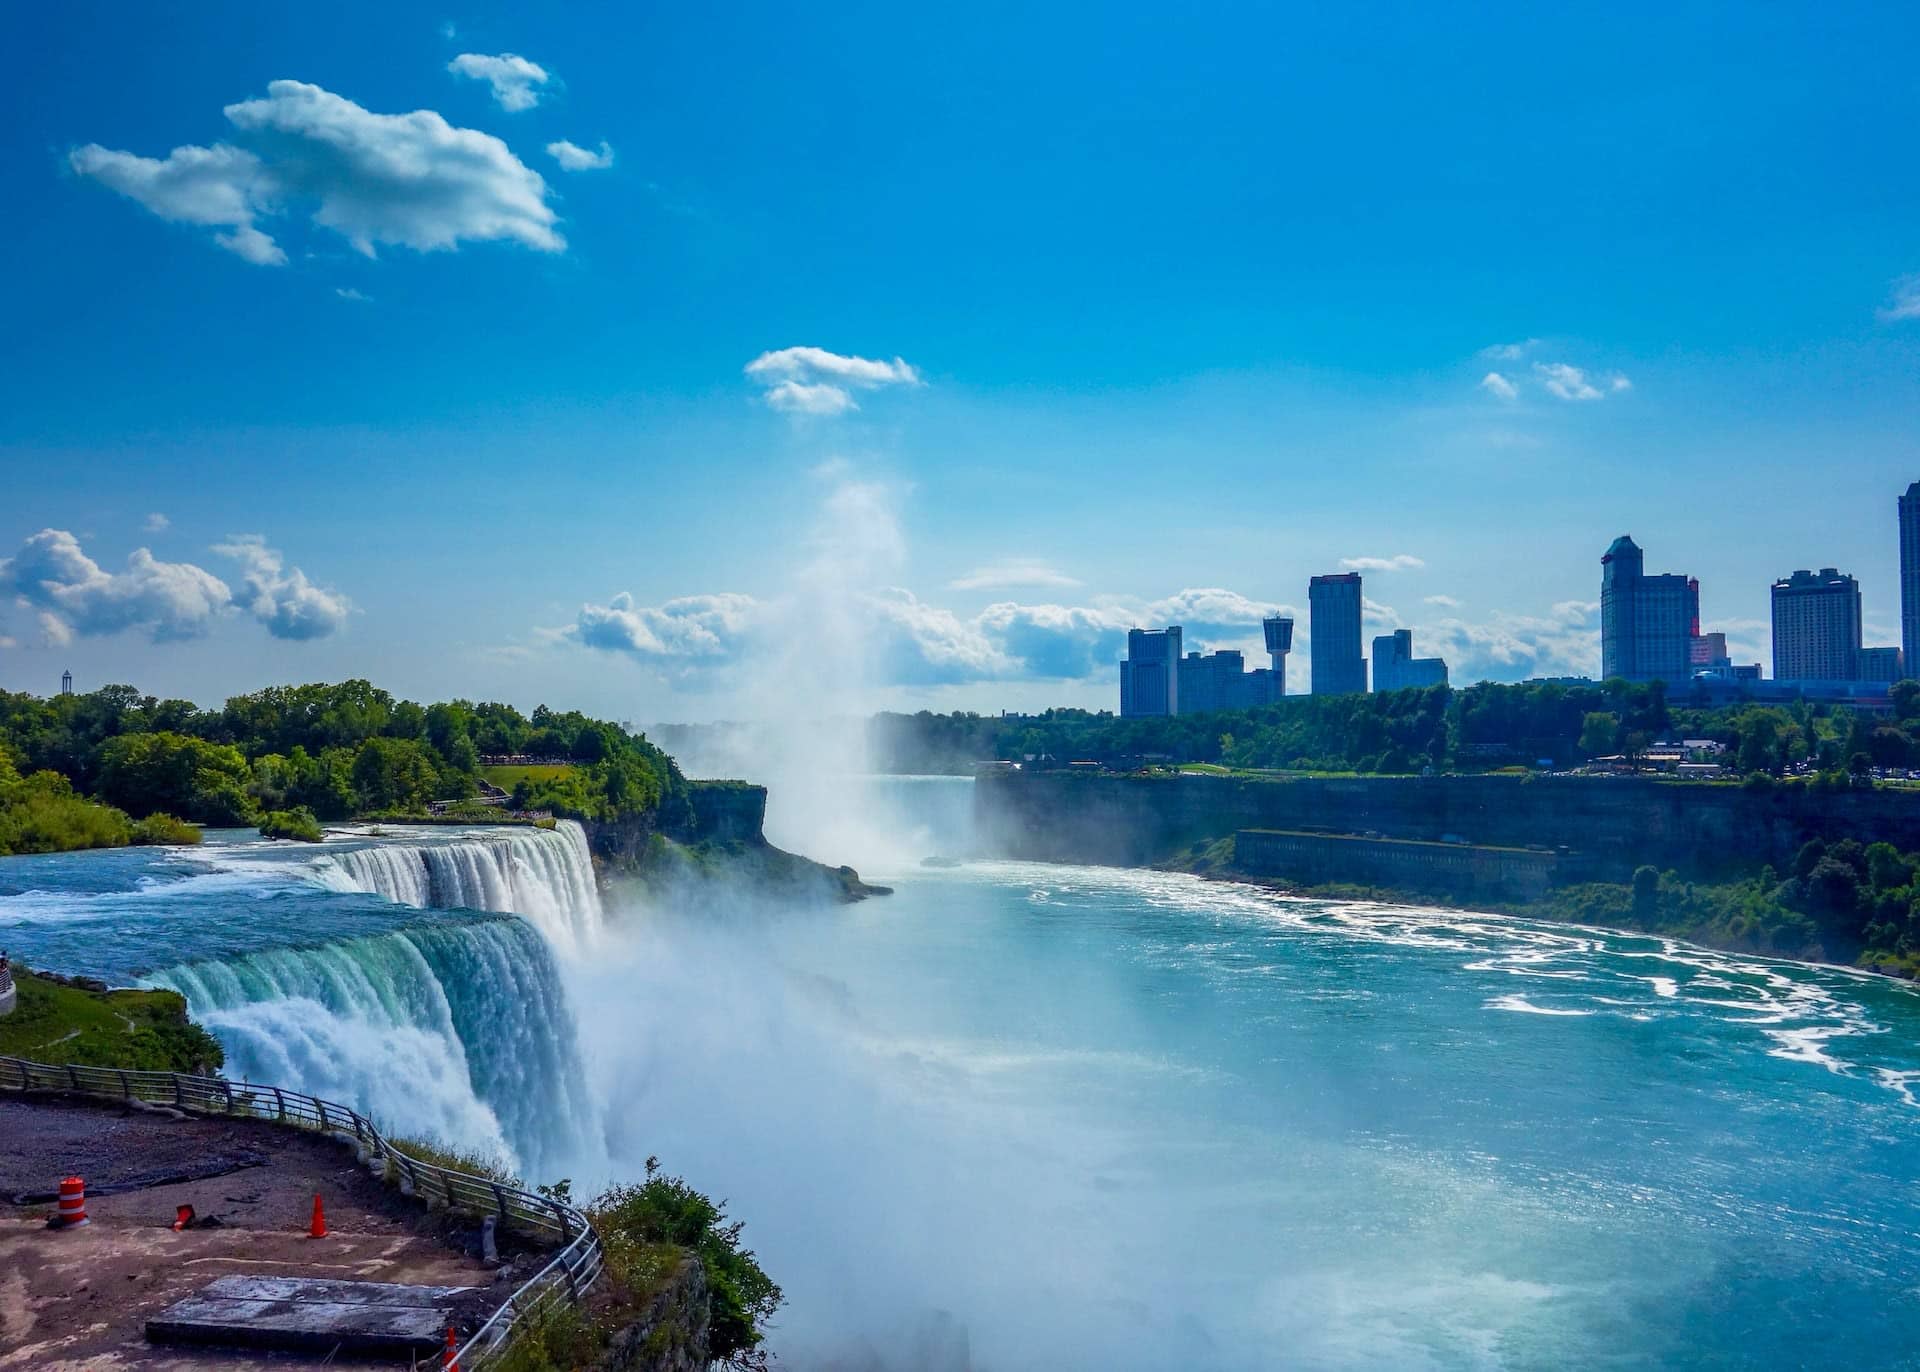 Niagara Falls: Witness the Power of Nature